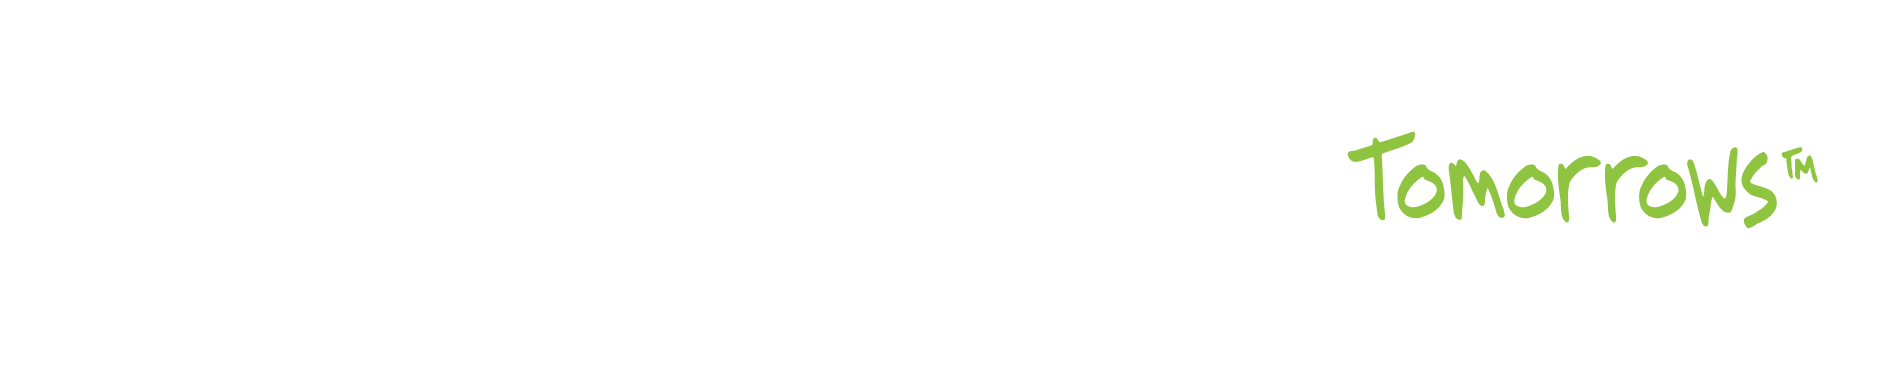 Ja inspire logo